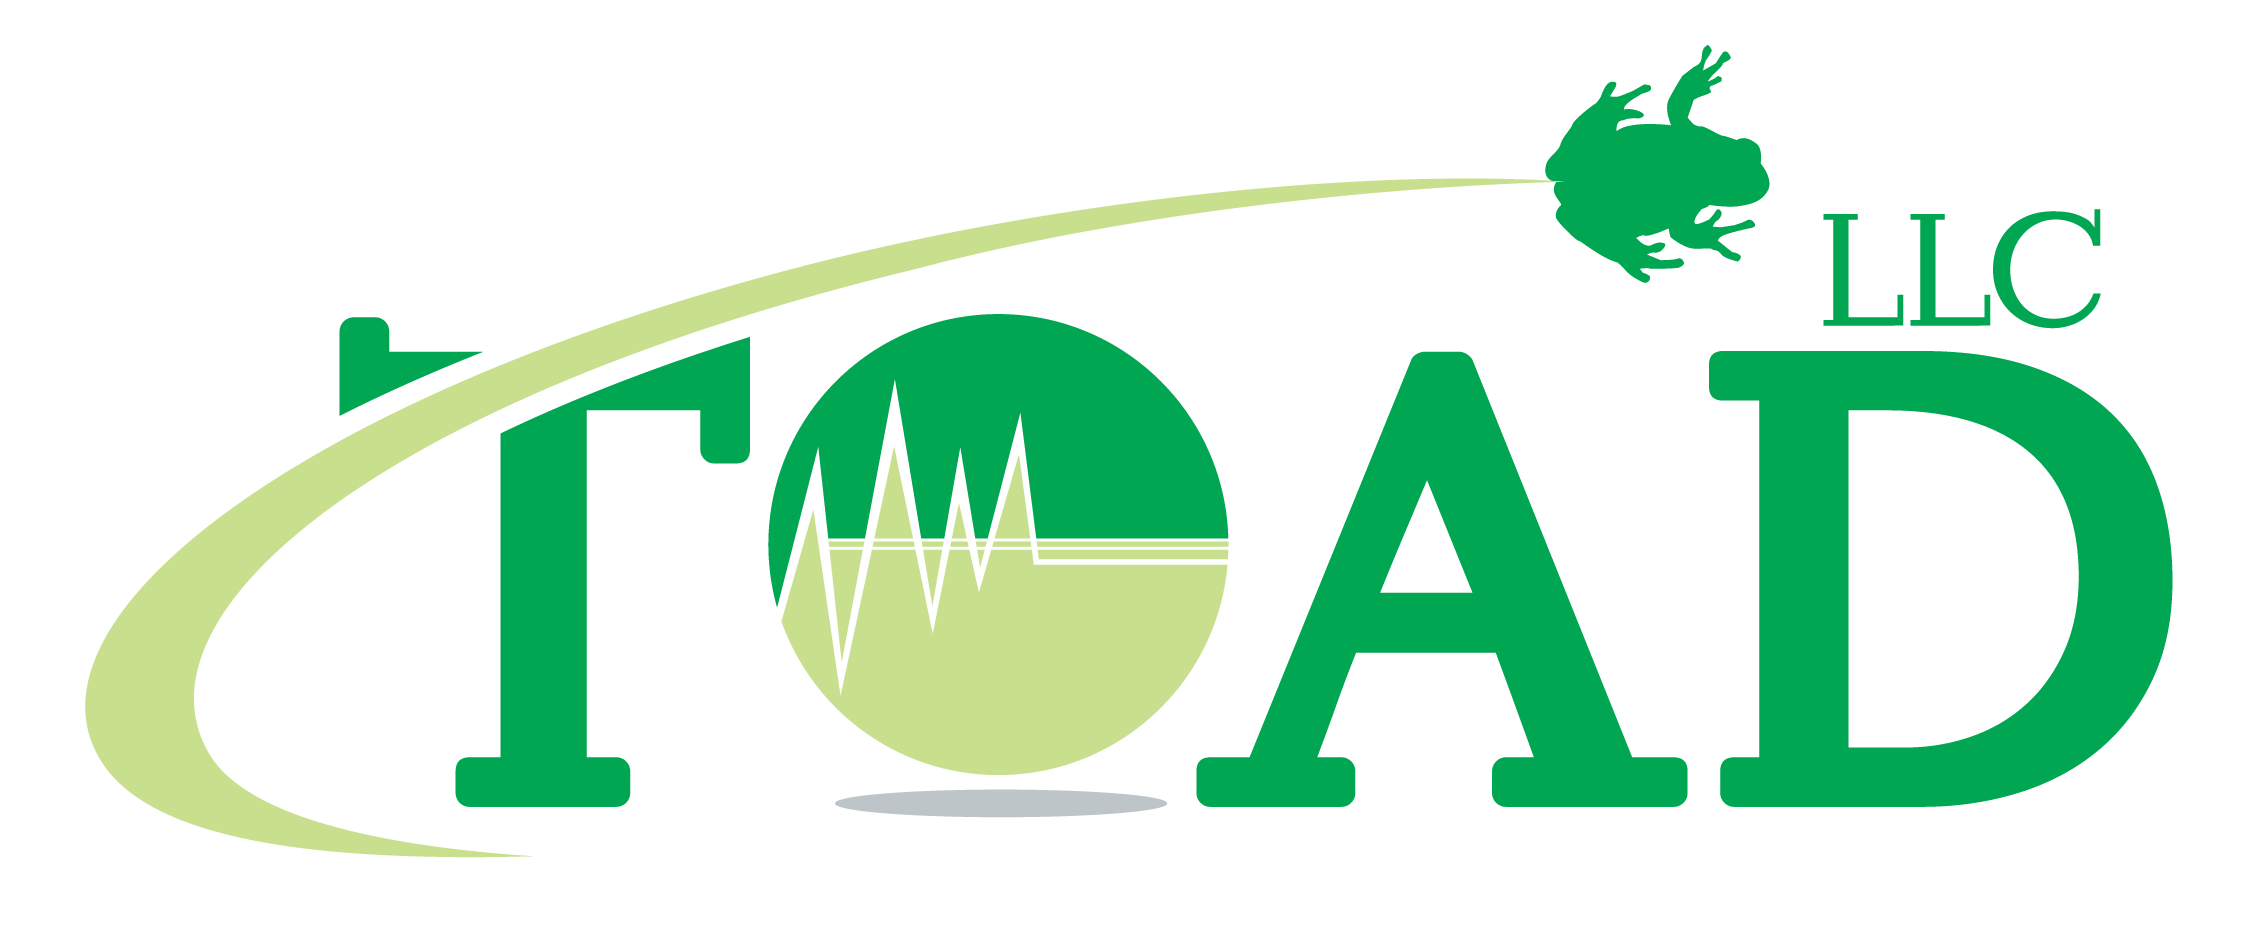 TOAD Logo